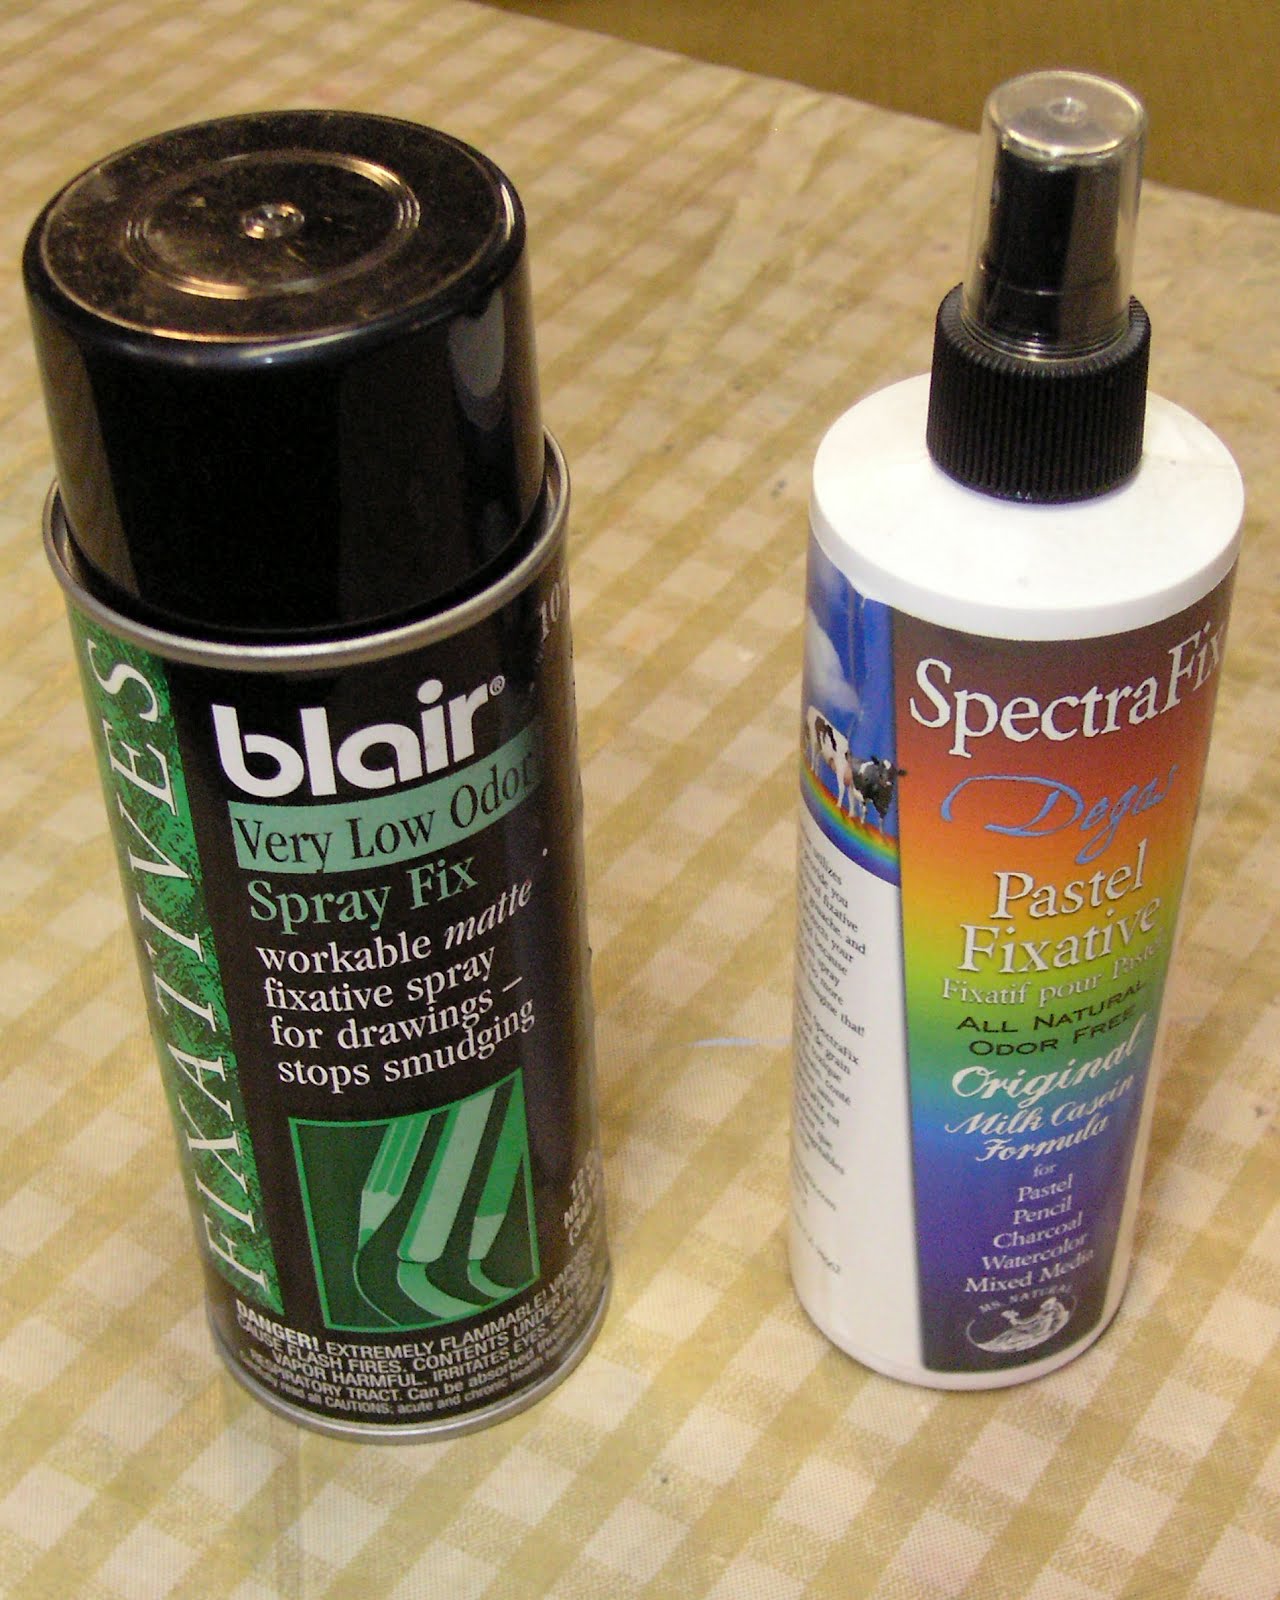 Workable Fixative Spray